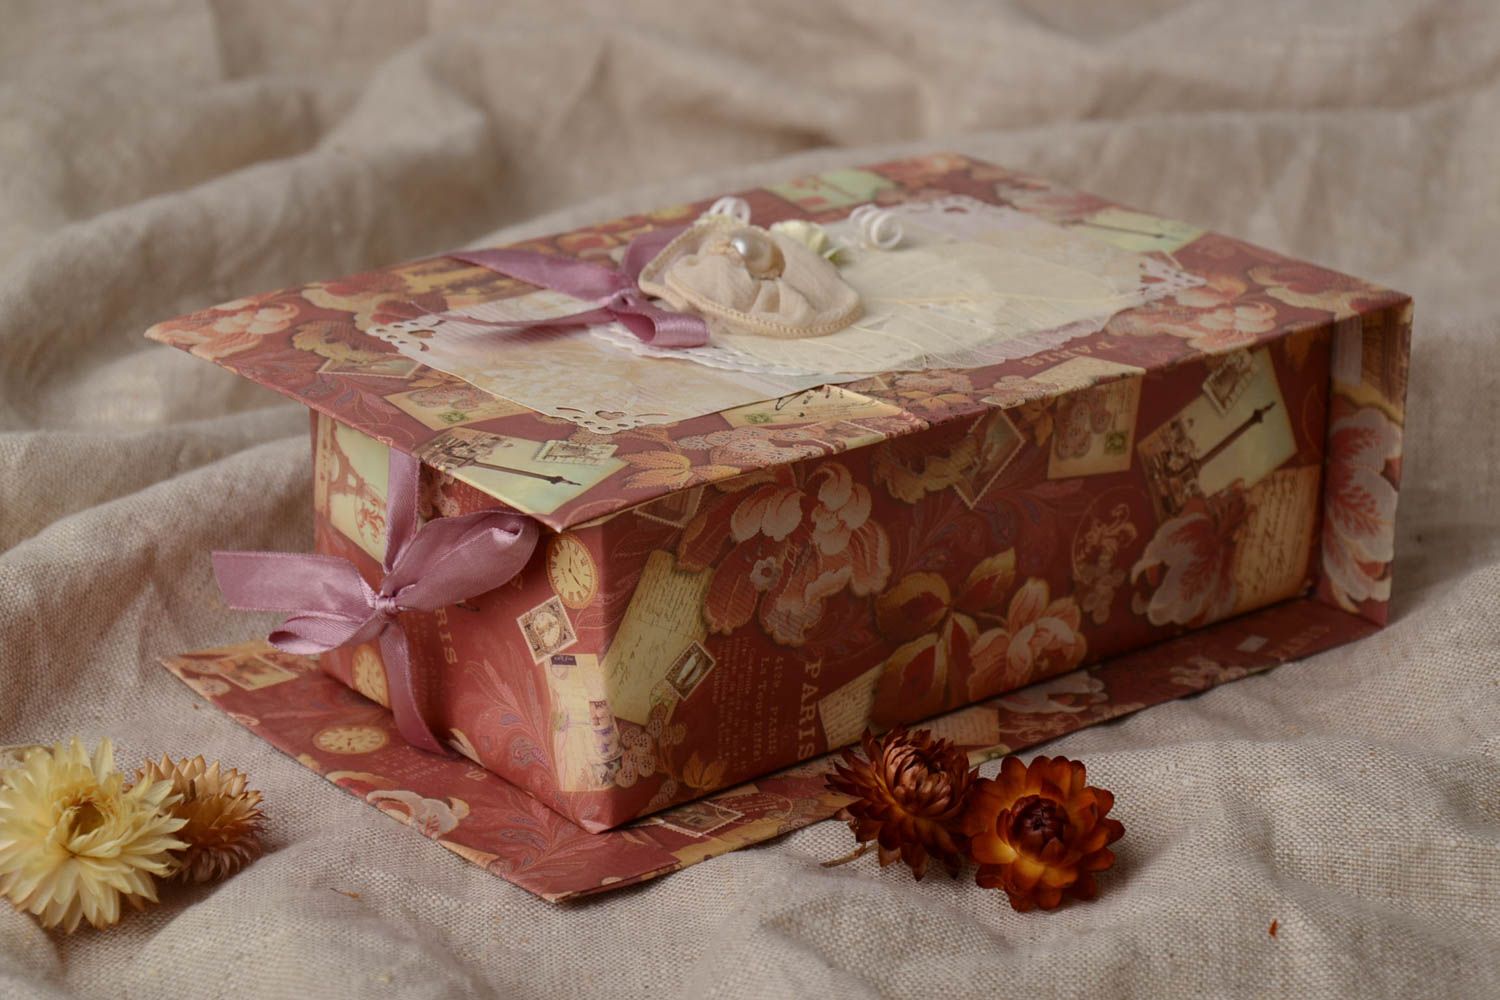 Декоративная коробка для подарка с лентами и тканью внутри красивая хэнд мейд фото 1